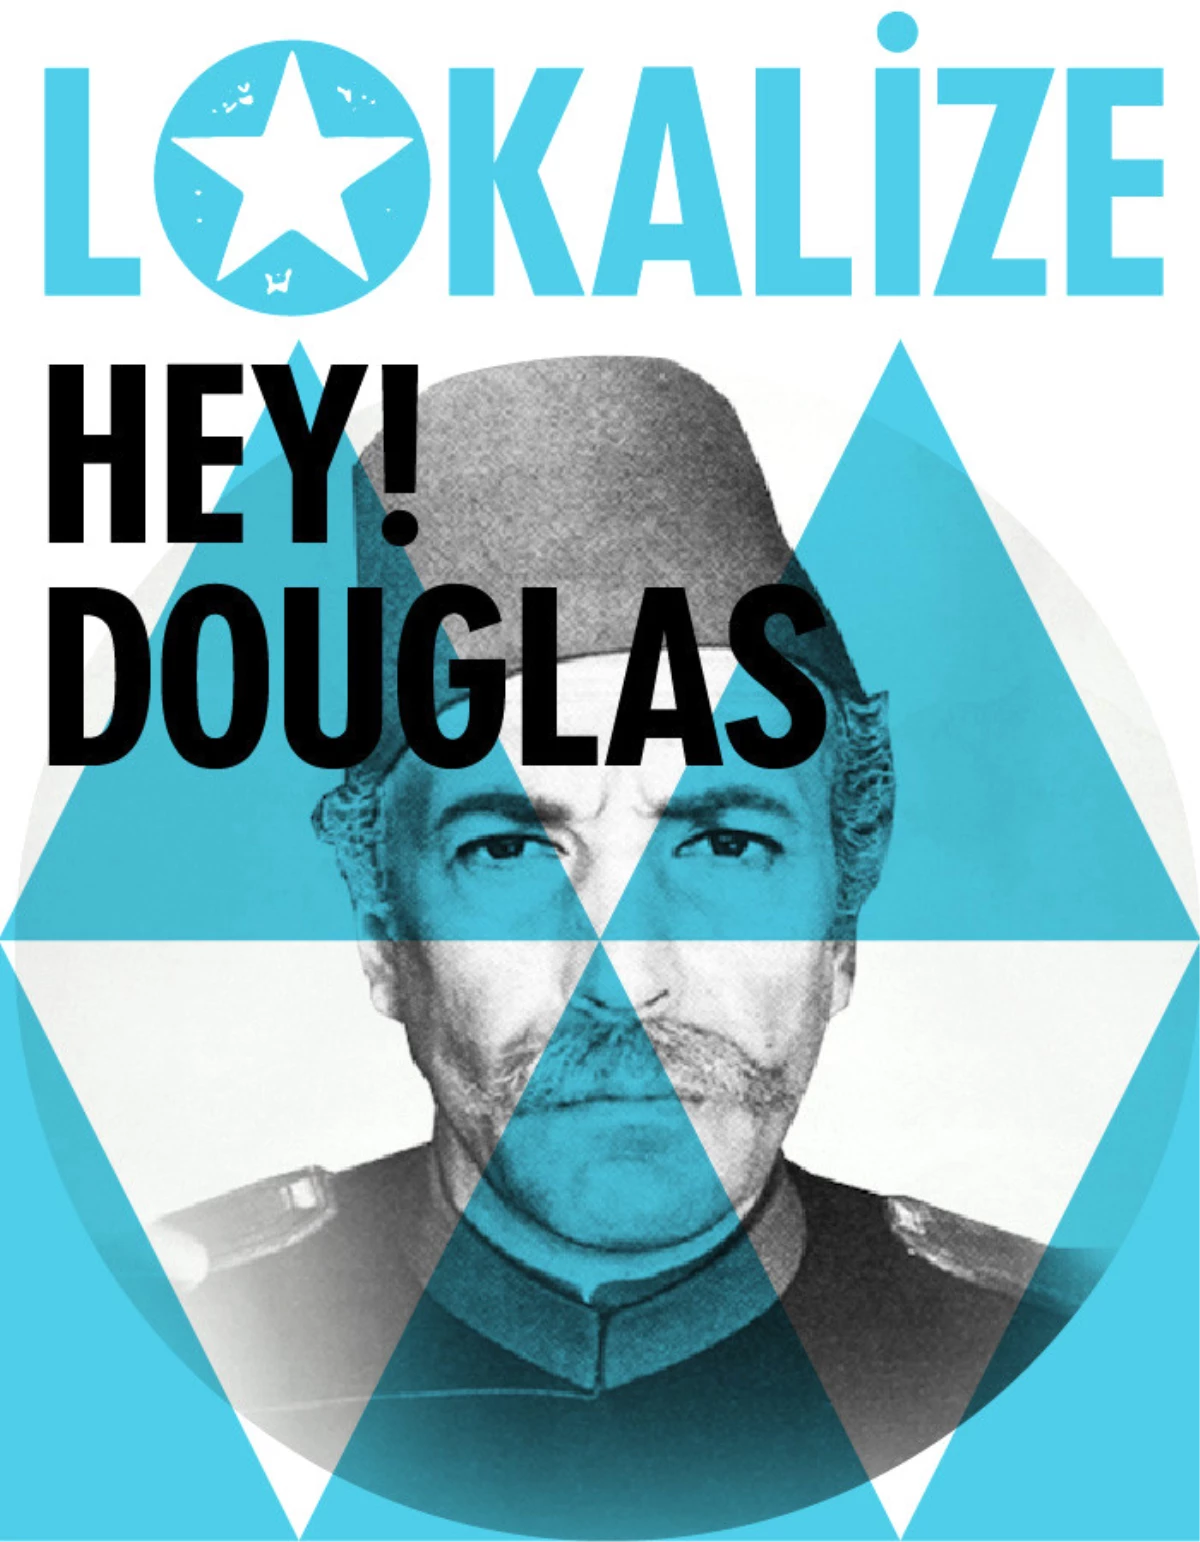 Lokalize: Hey! Douglas